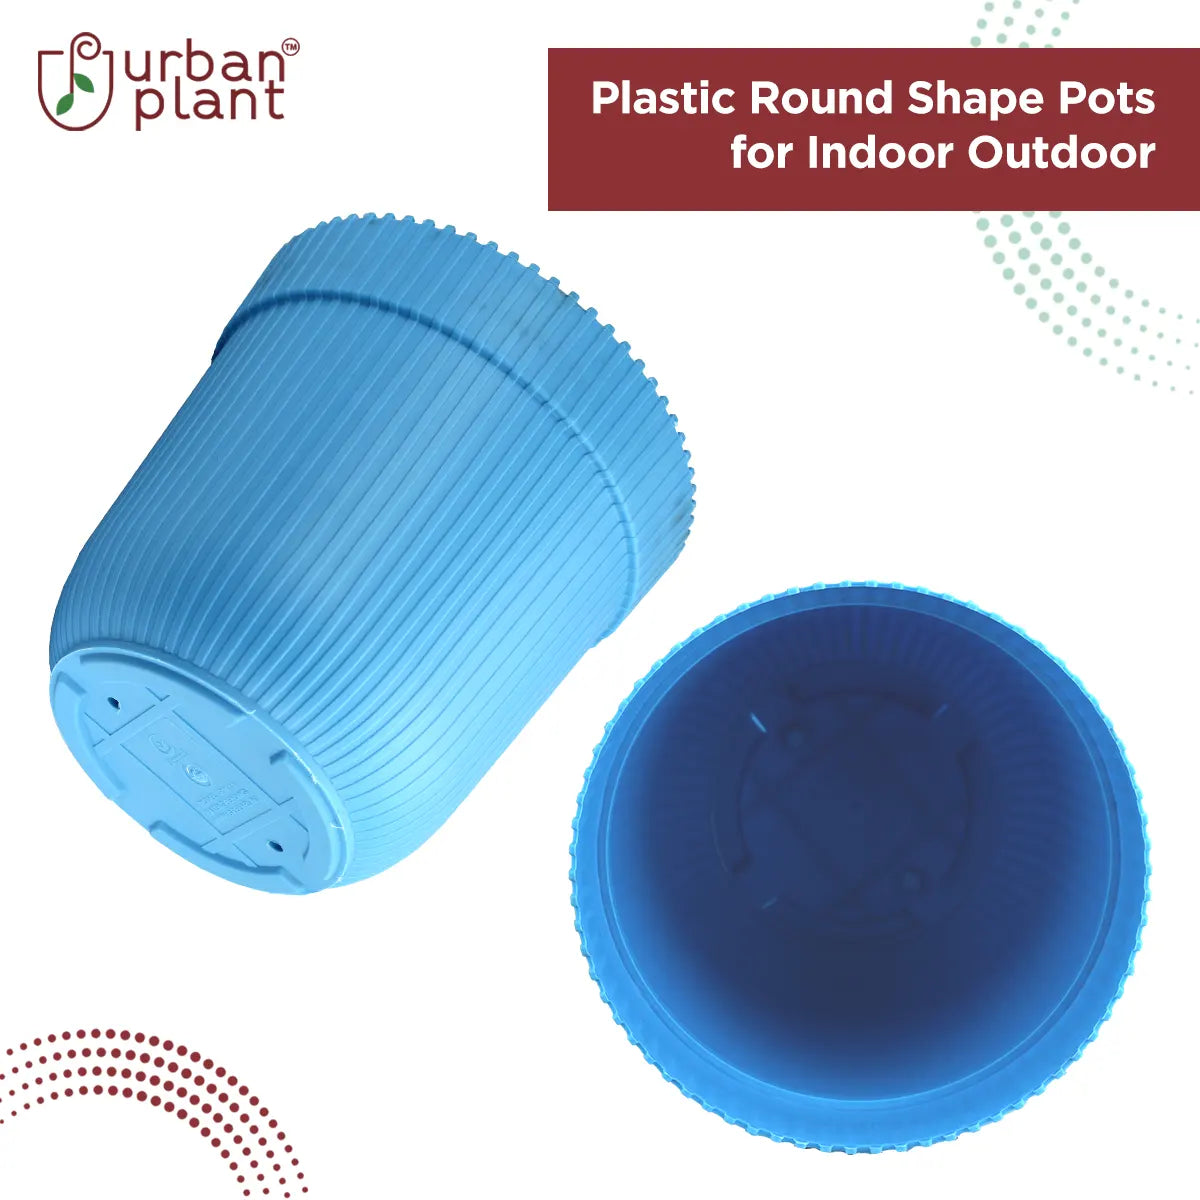 Plastic Round Shape Planter Pot -Set of 2 Urban Plant 